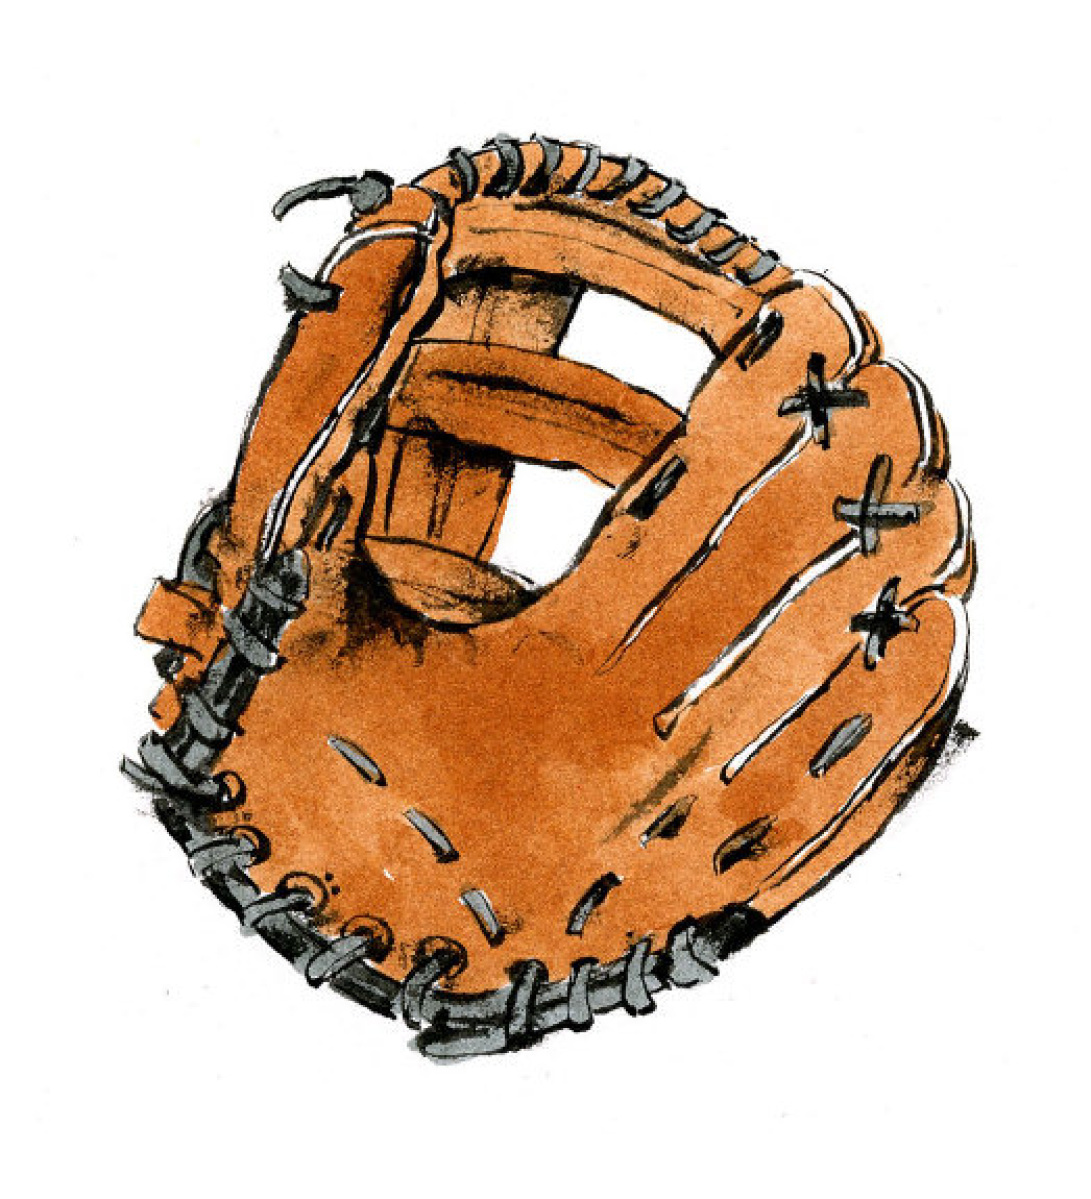 free-baseball-glove-cliparts-download-free-baseball-glove-cliparts-png-images-free-cliparts-on